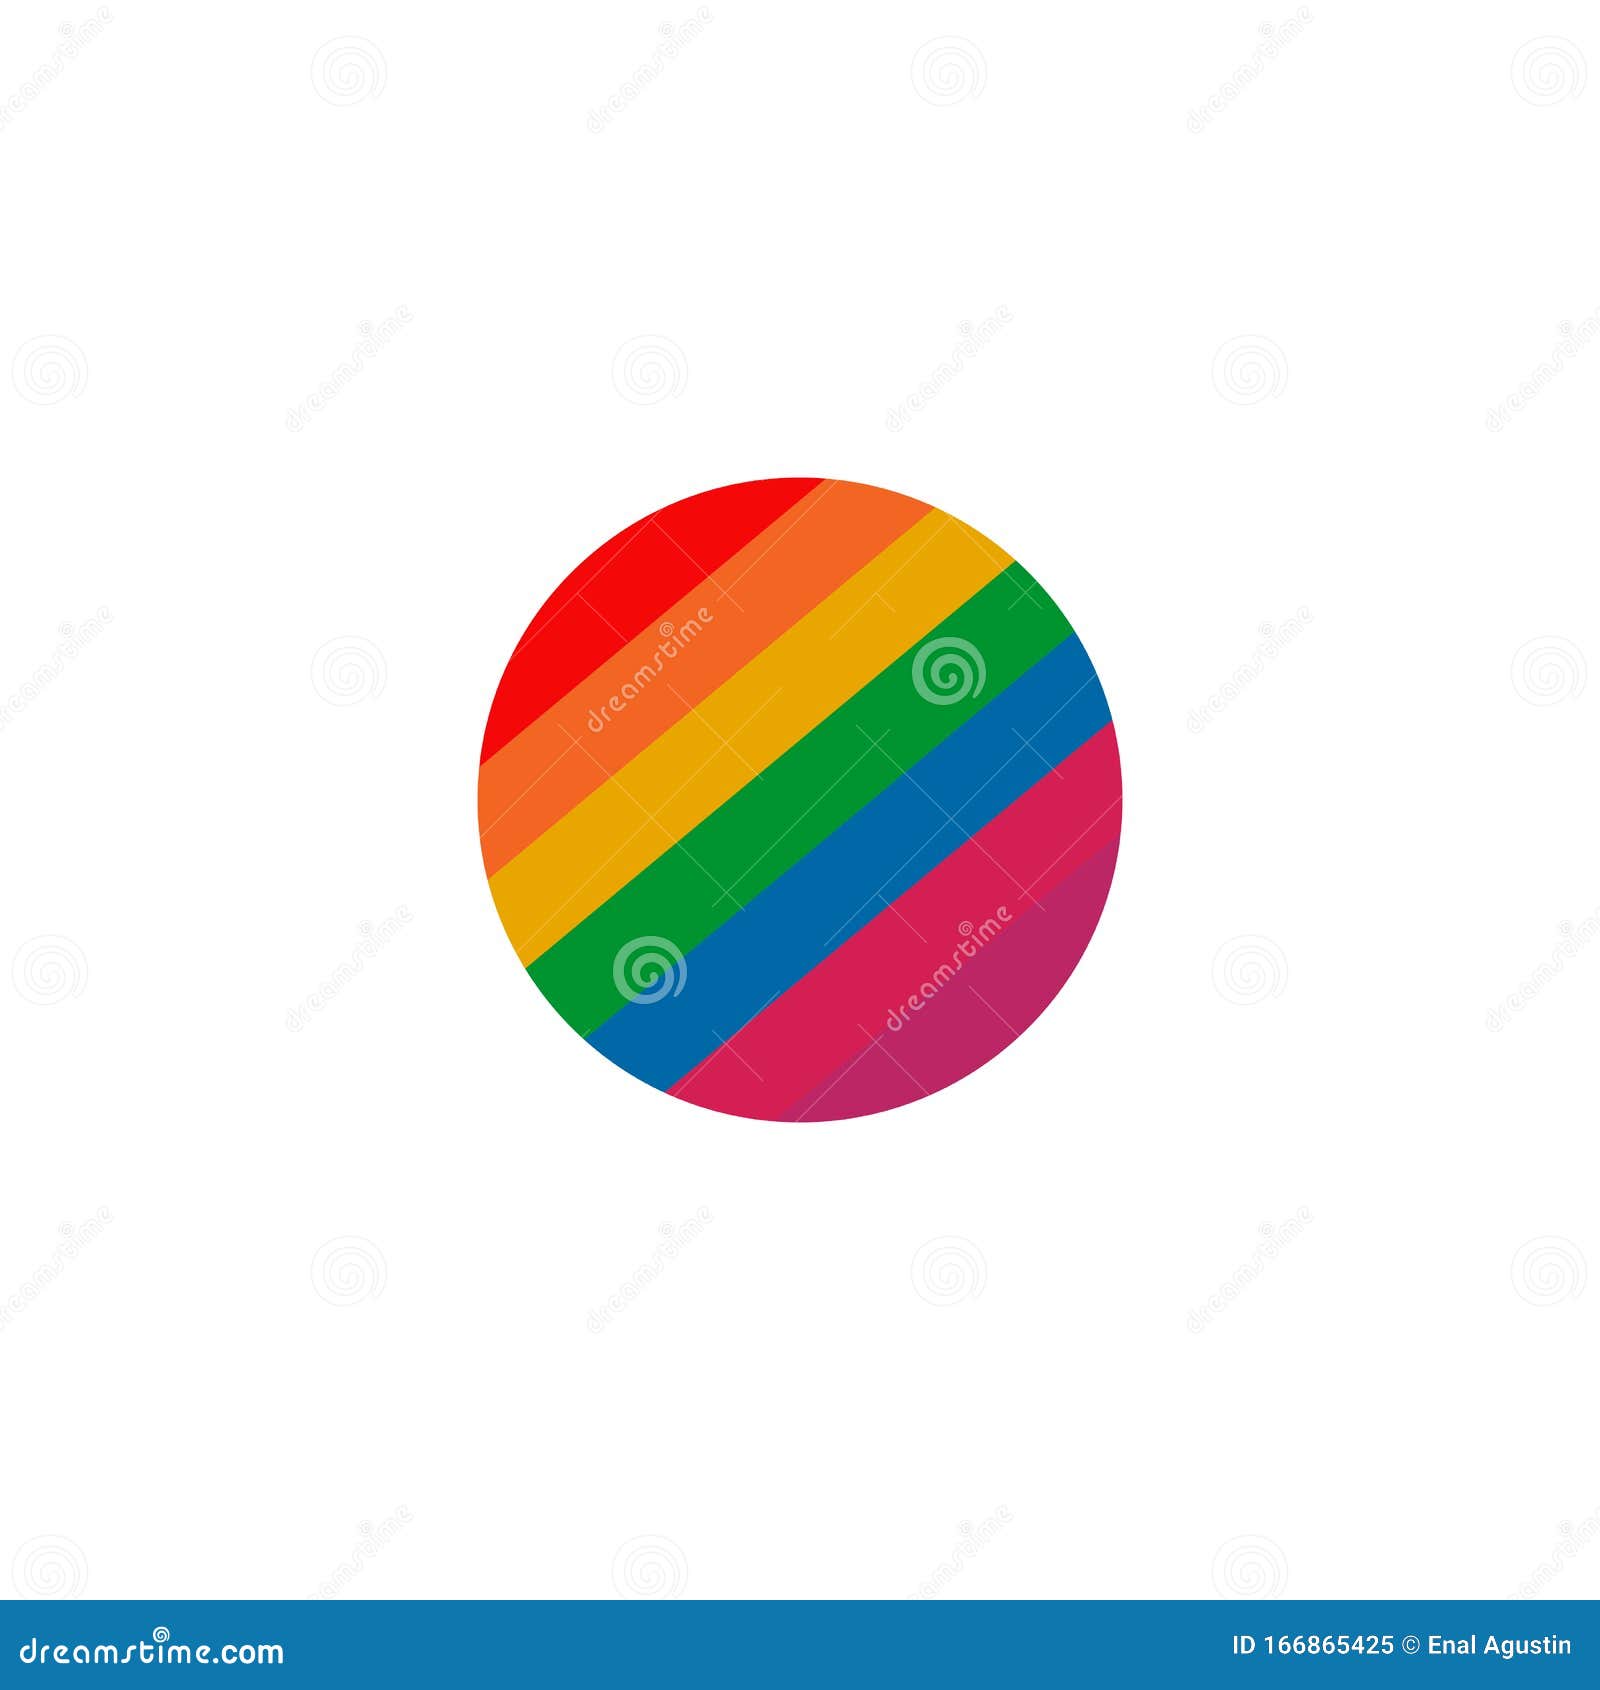 rainbow tornado company logo